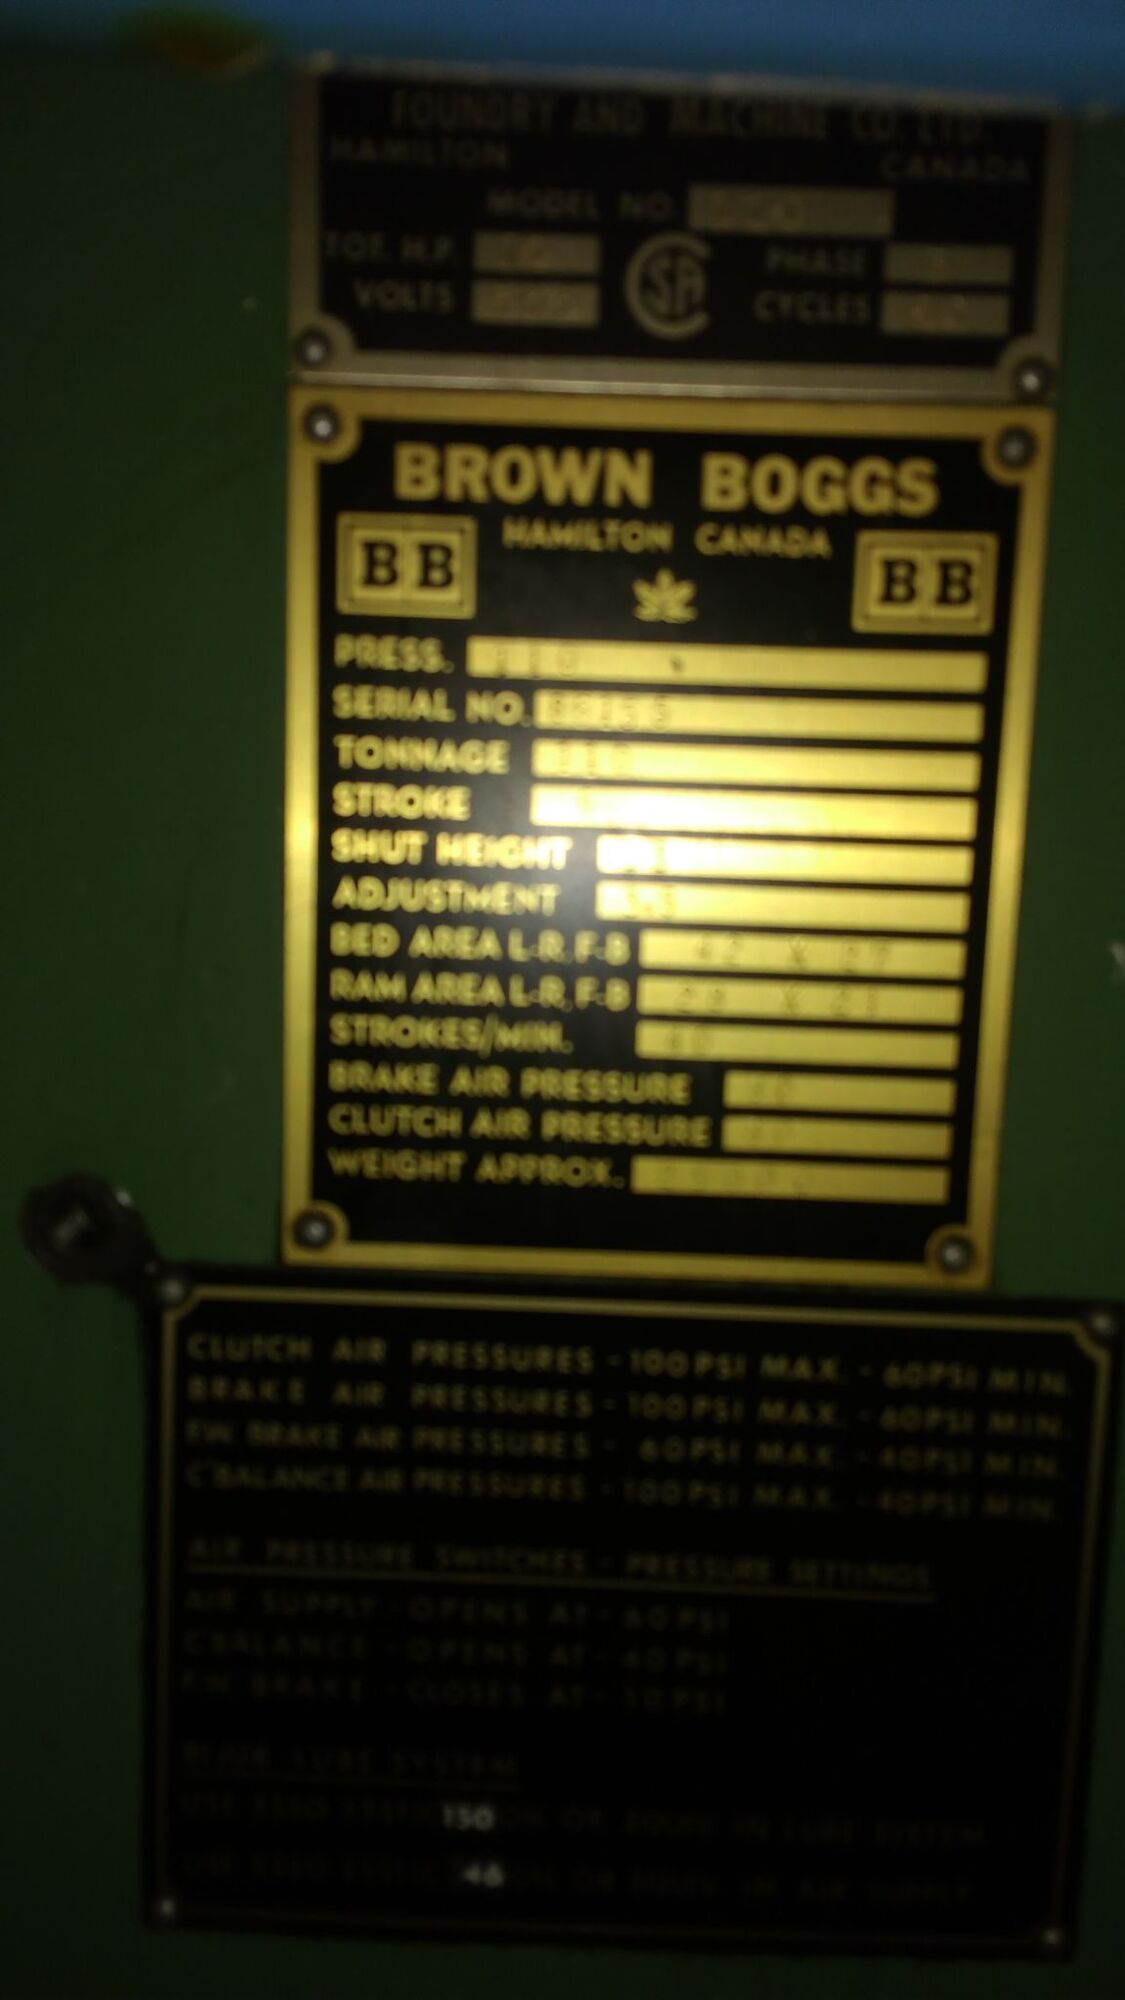 Brown Boggs 20LJ Presses, GAP FRAME, (Single Crank) - See Also P6185, P6209 | Industrial Machinery Exchange Inc.